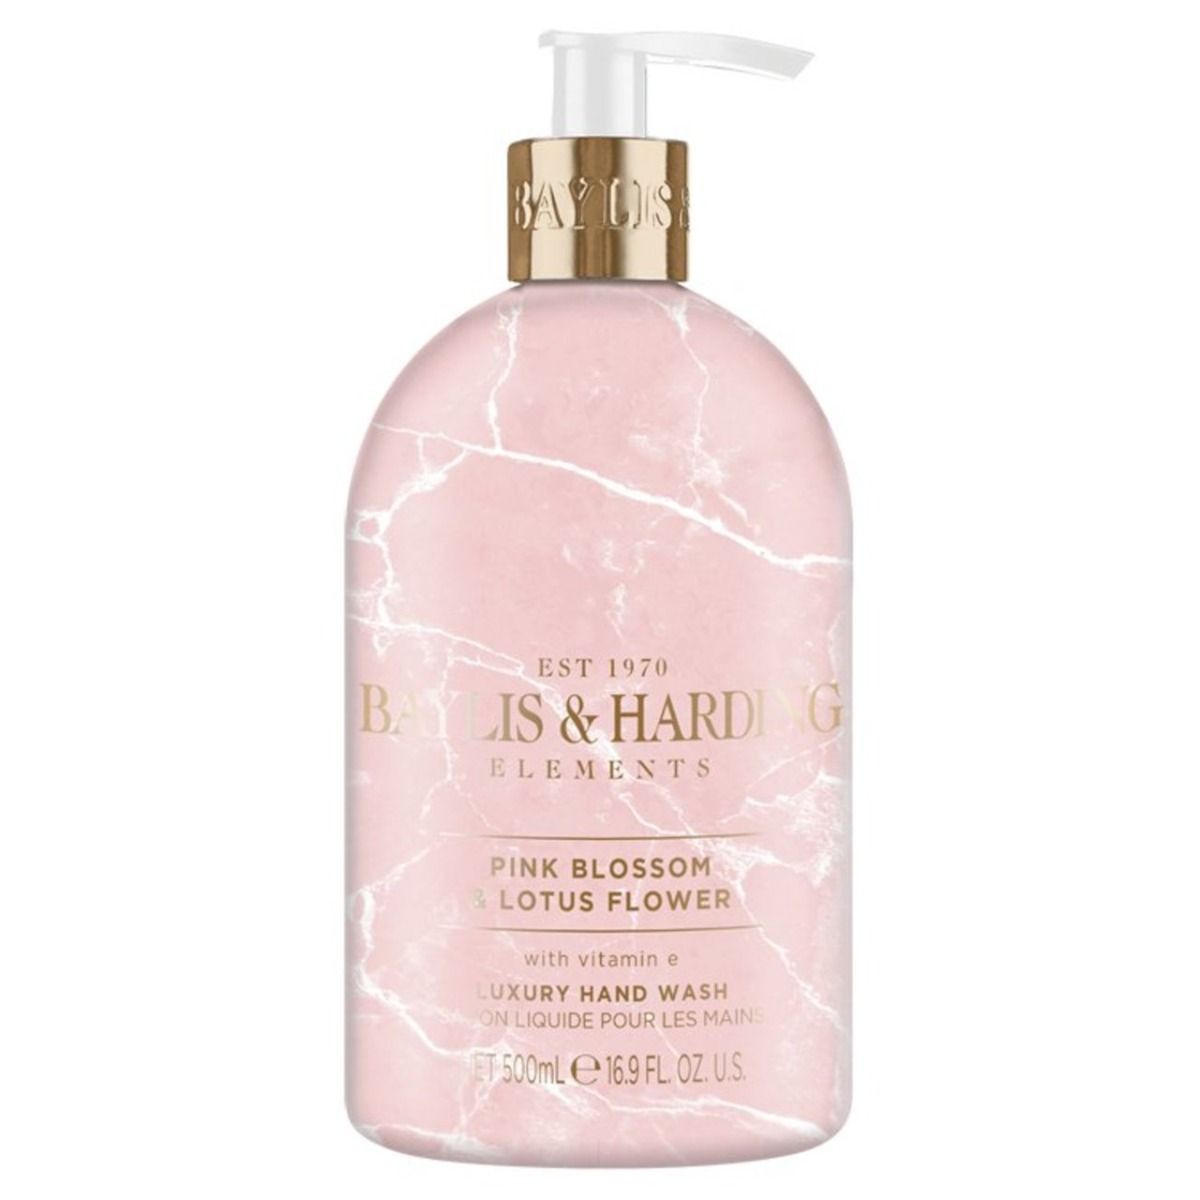 Жидкое мыло Baylis & Harding Elements Pink Blossom & Lotus Flower, 500 мл